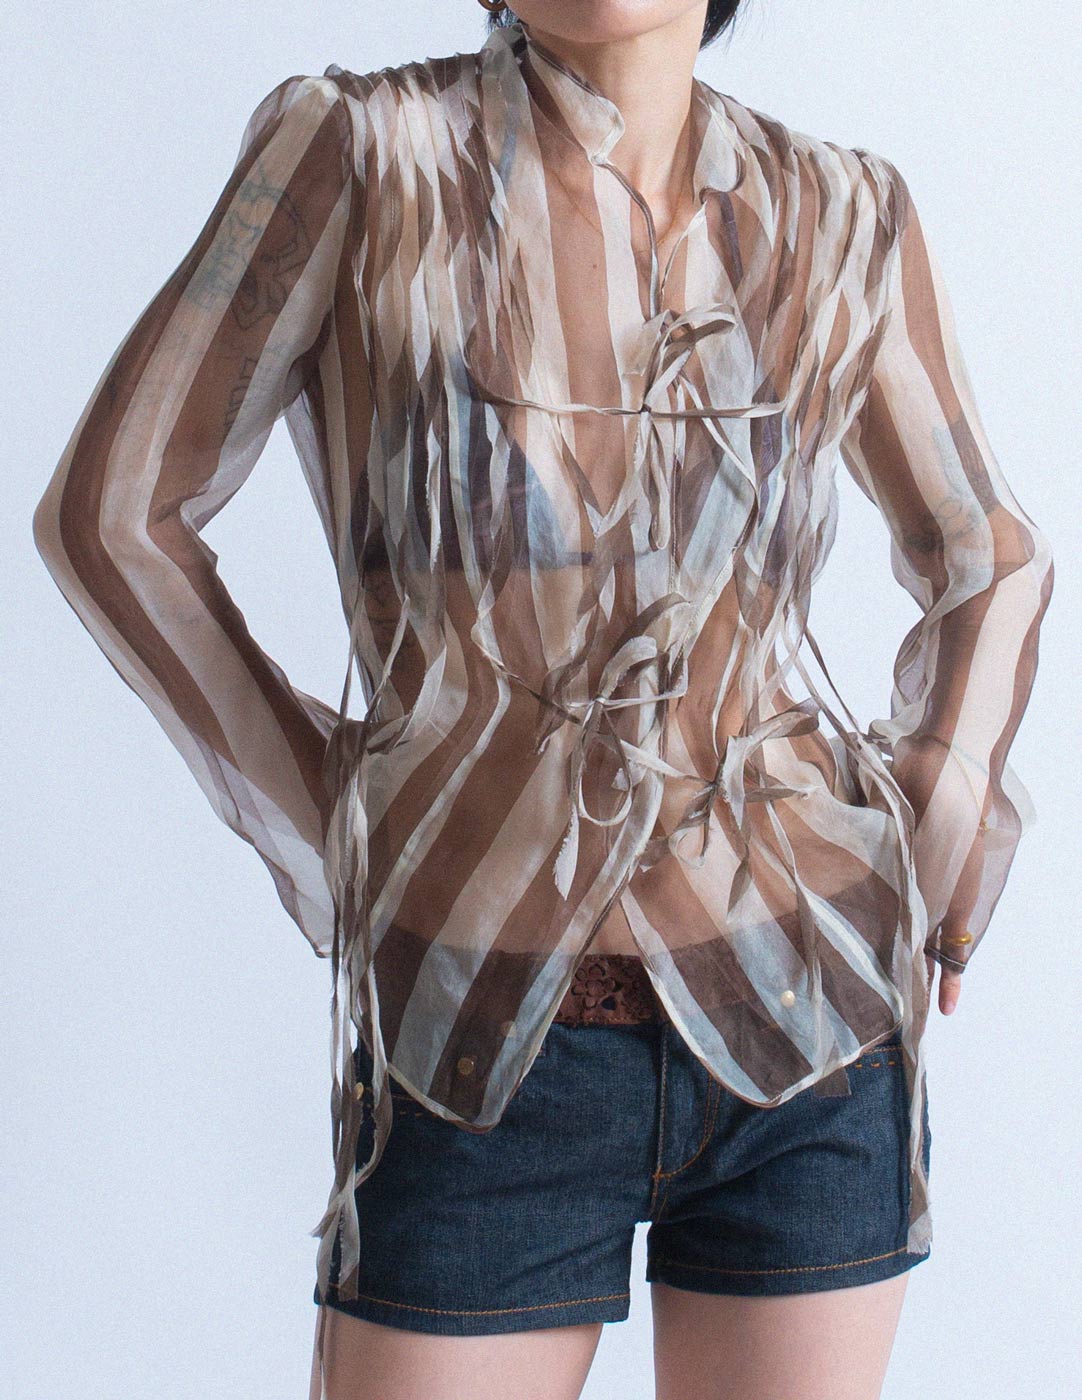 Gianfranco Ferré vintage striped sheer silk blouse front detail